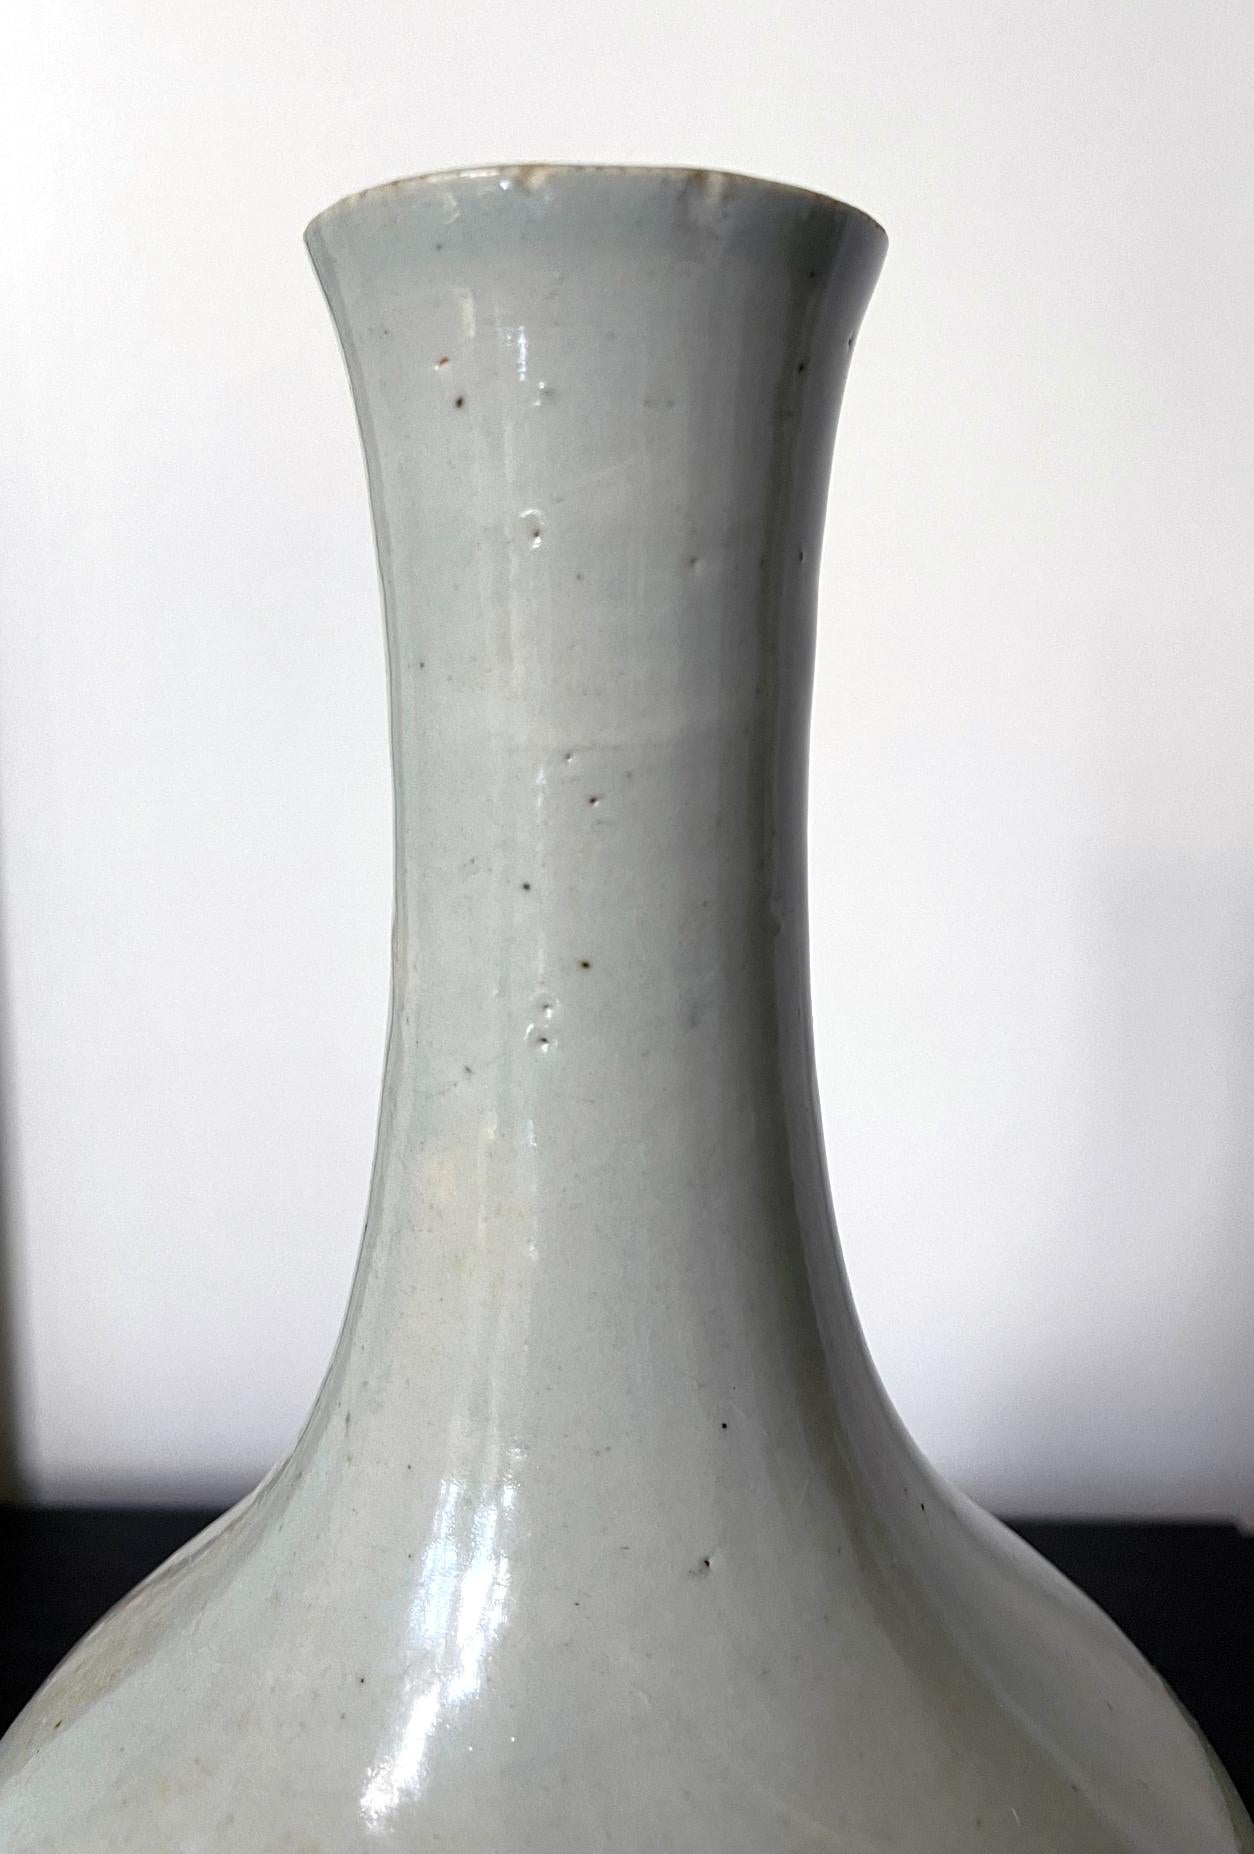 Other Large Antique White Glazed Bottle Vase Korean Ceramic Joseon Dynasty For Sale